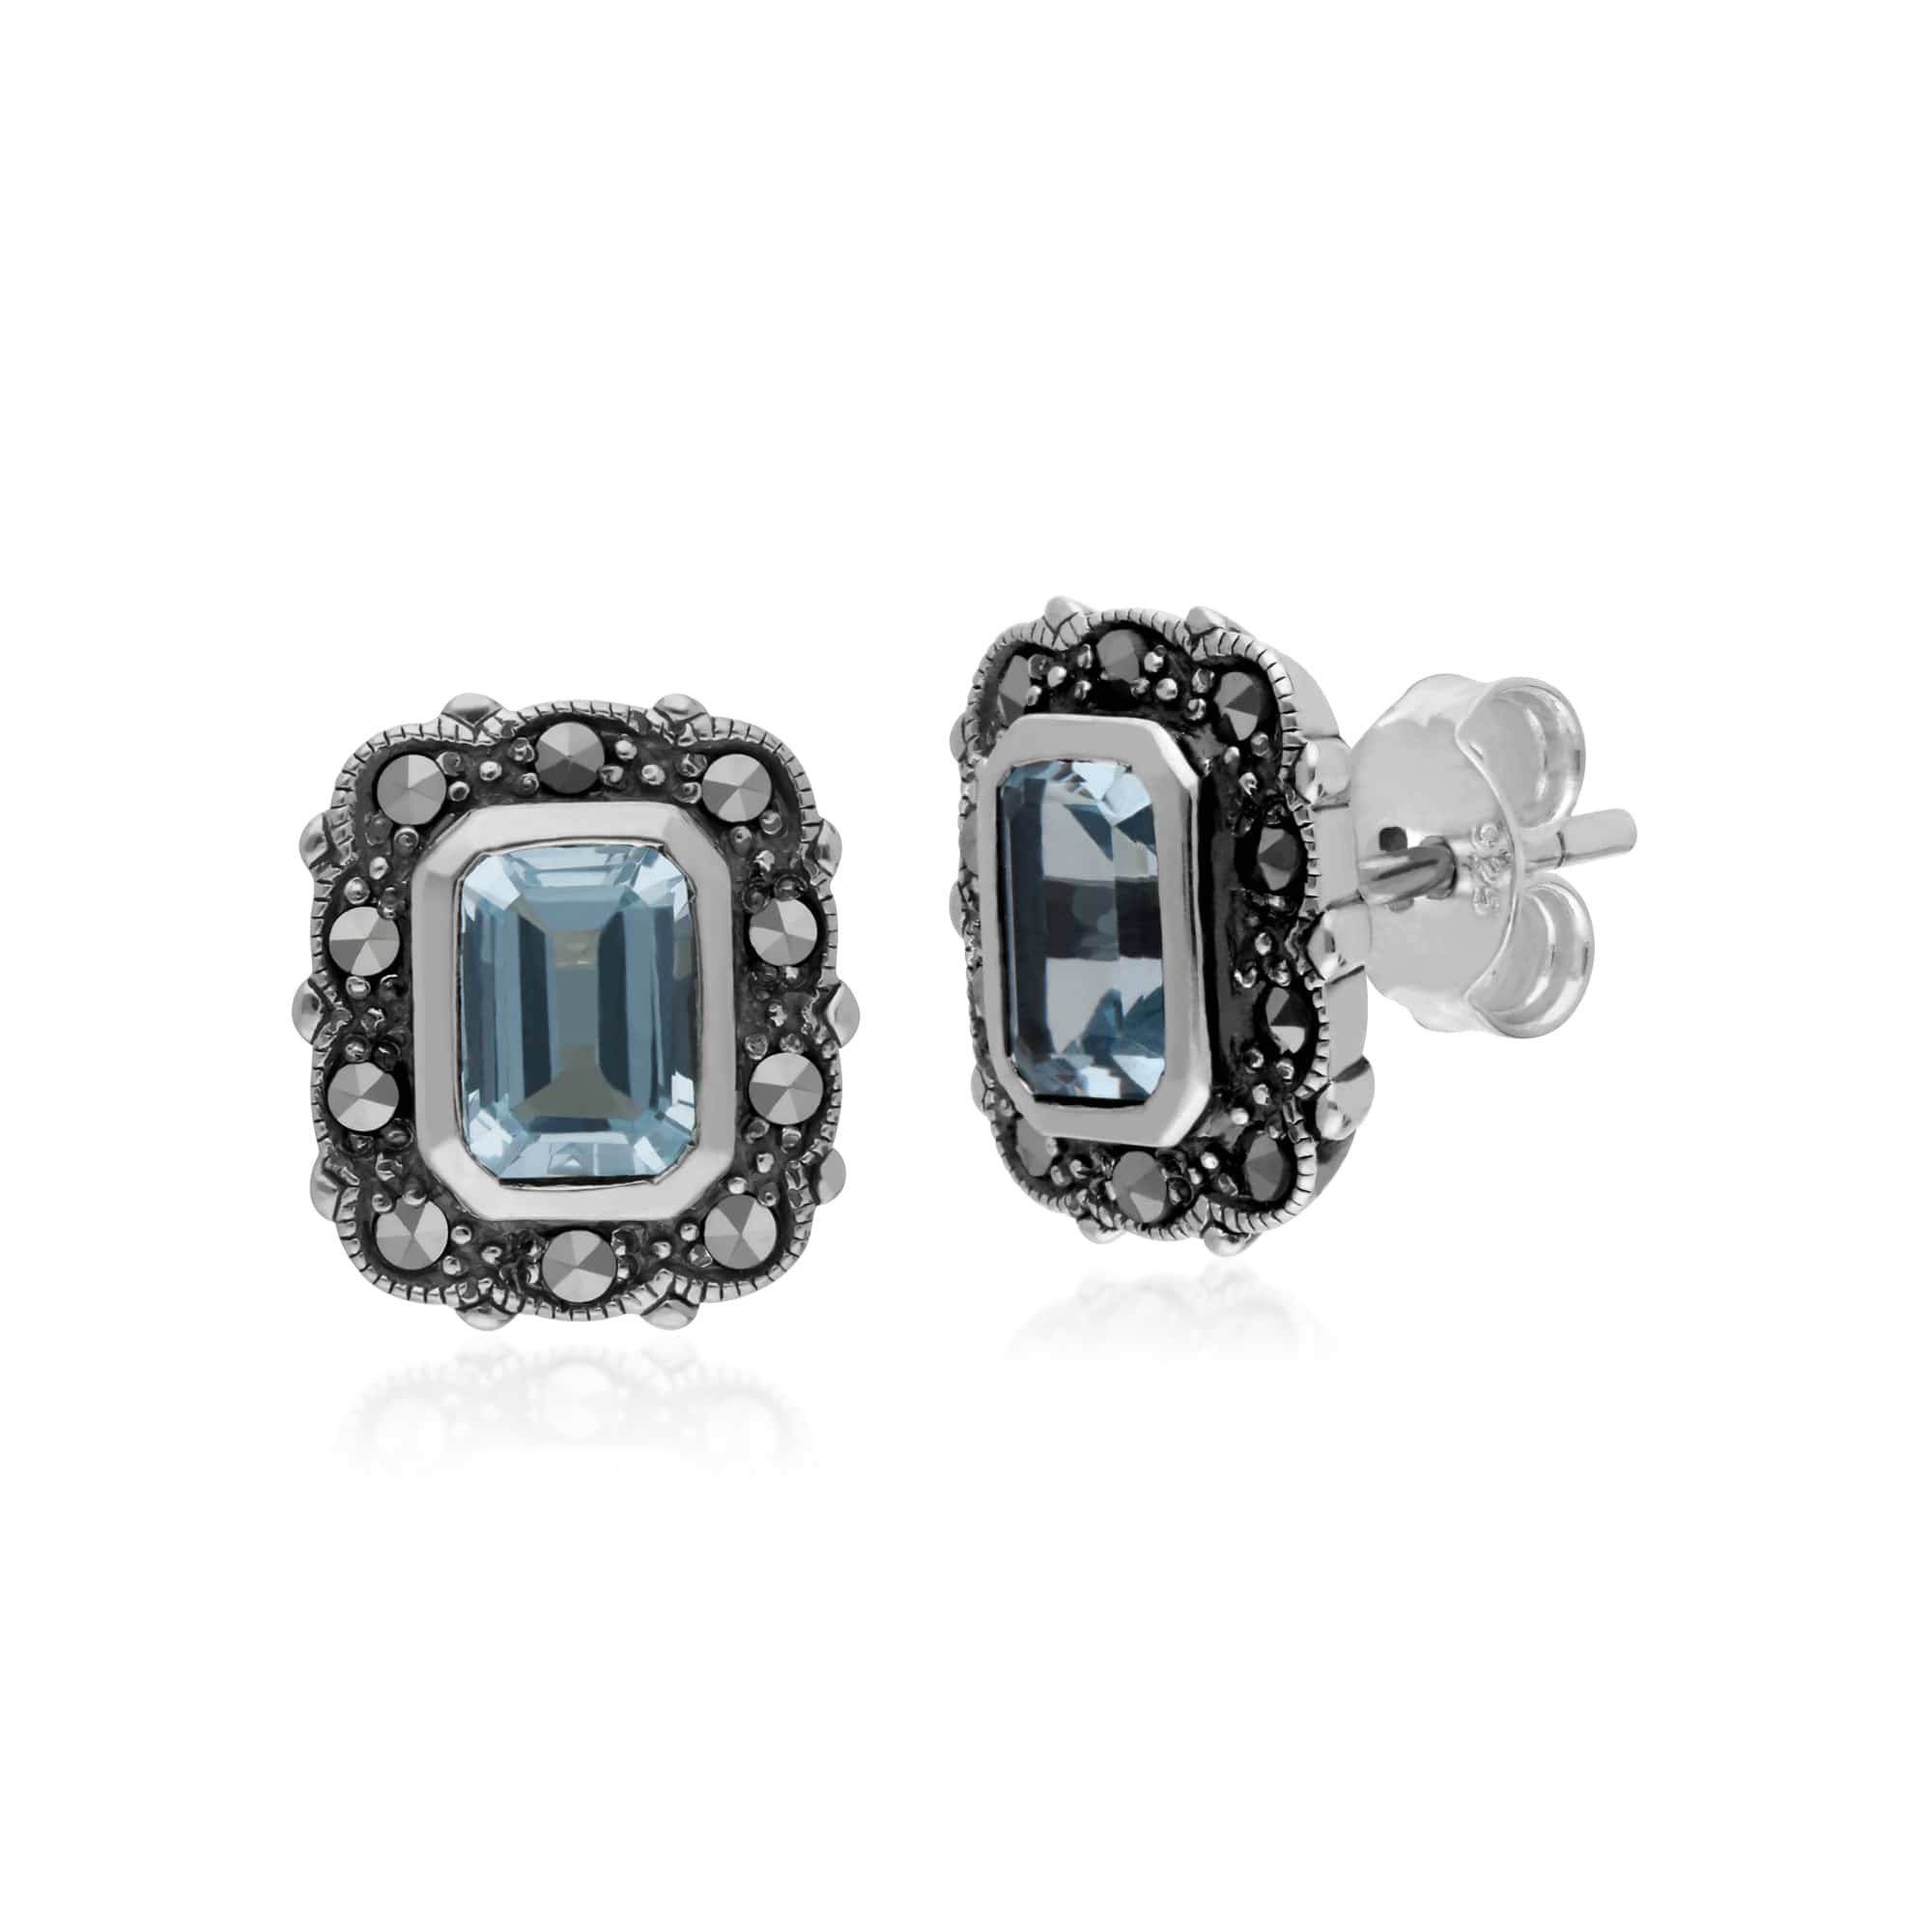 214E852602925 Gemondo Sterling Silver Blue Topaz & Marcasite Octagon Art Nouveau Earrings 2